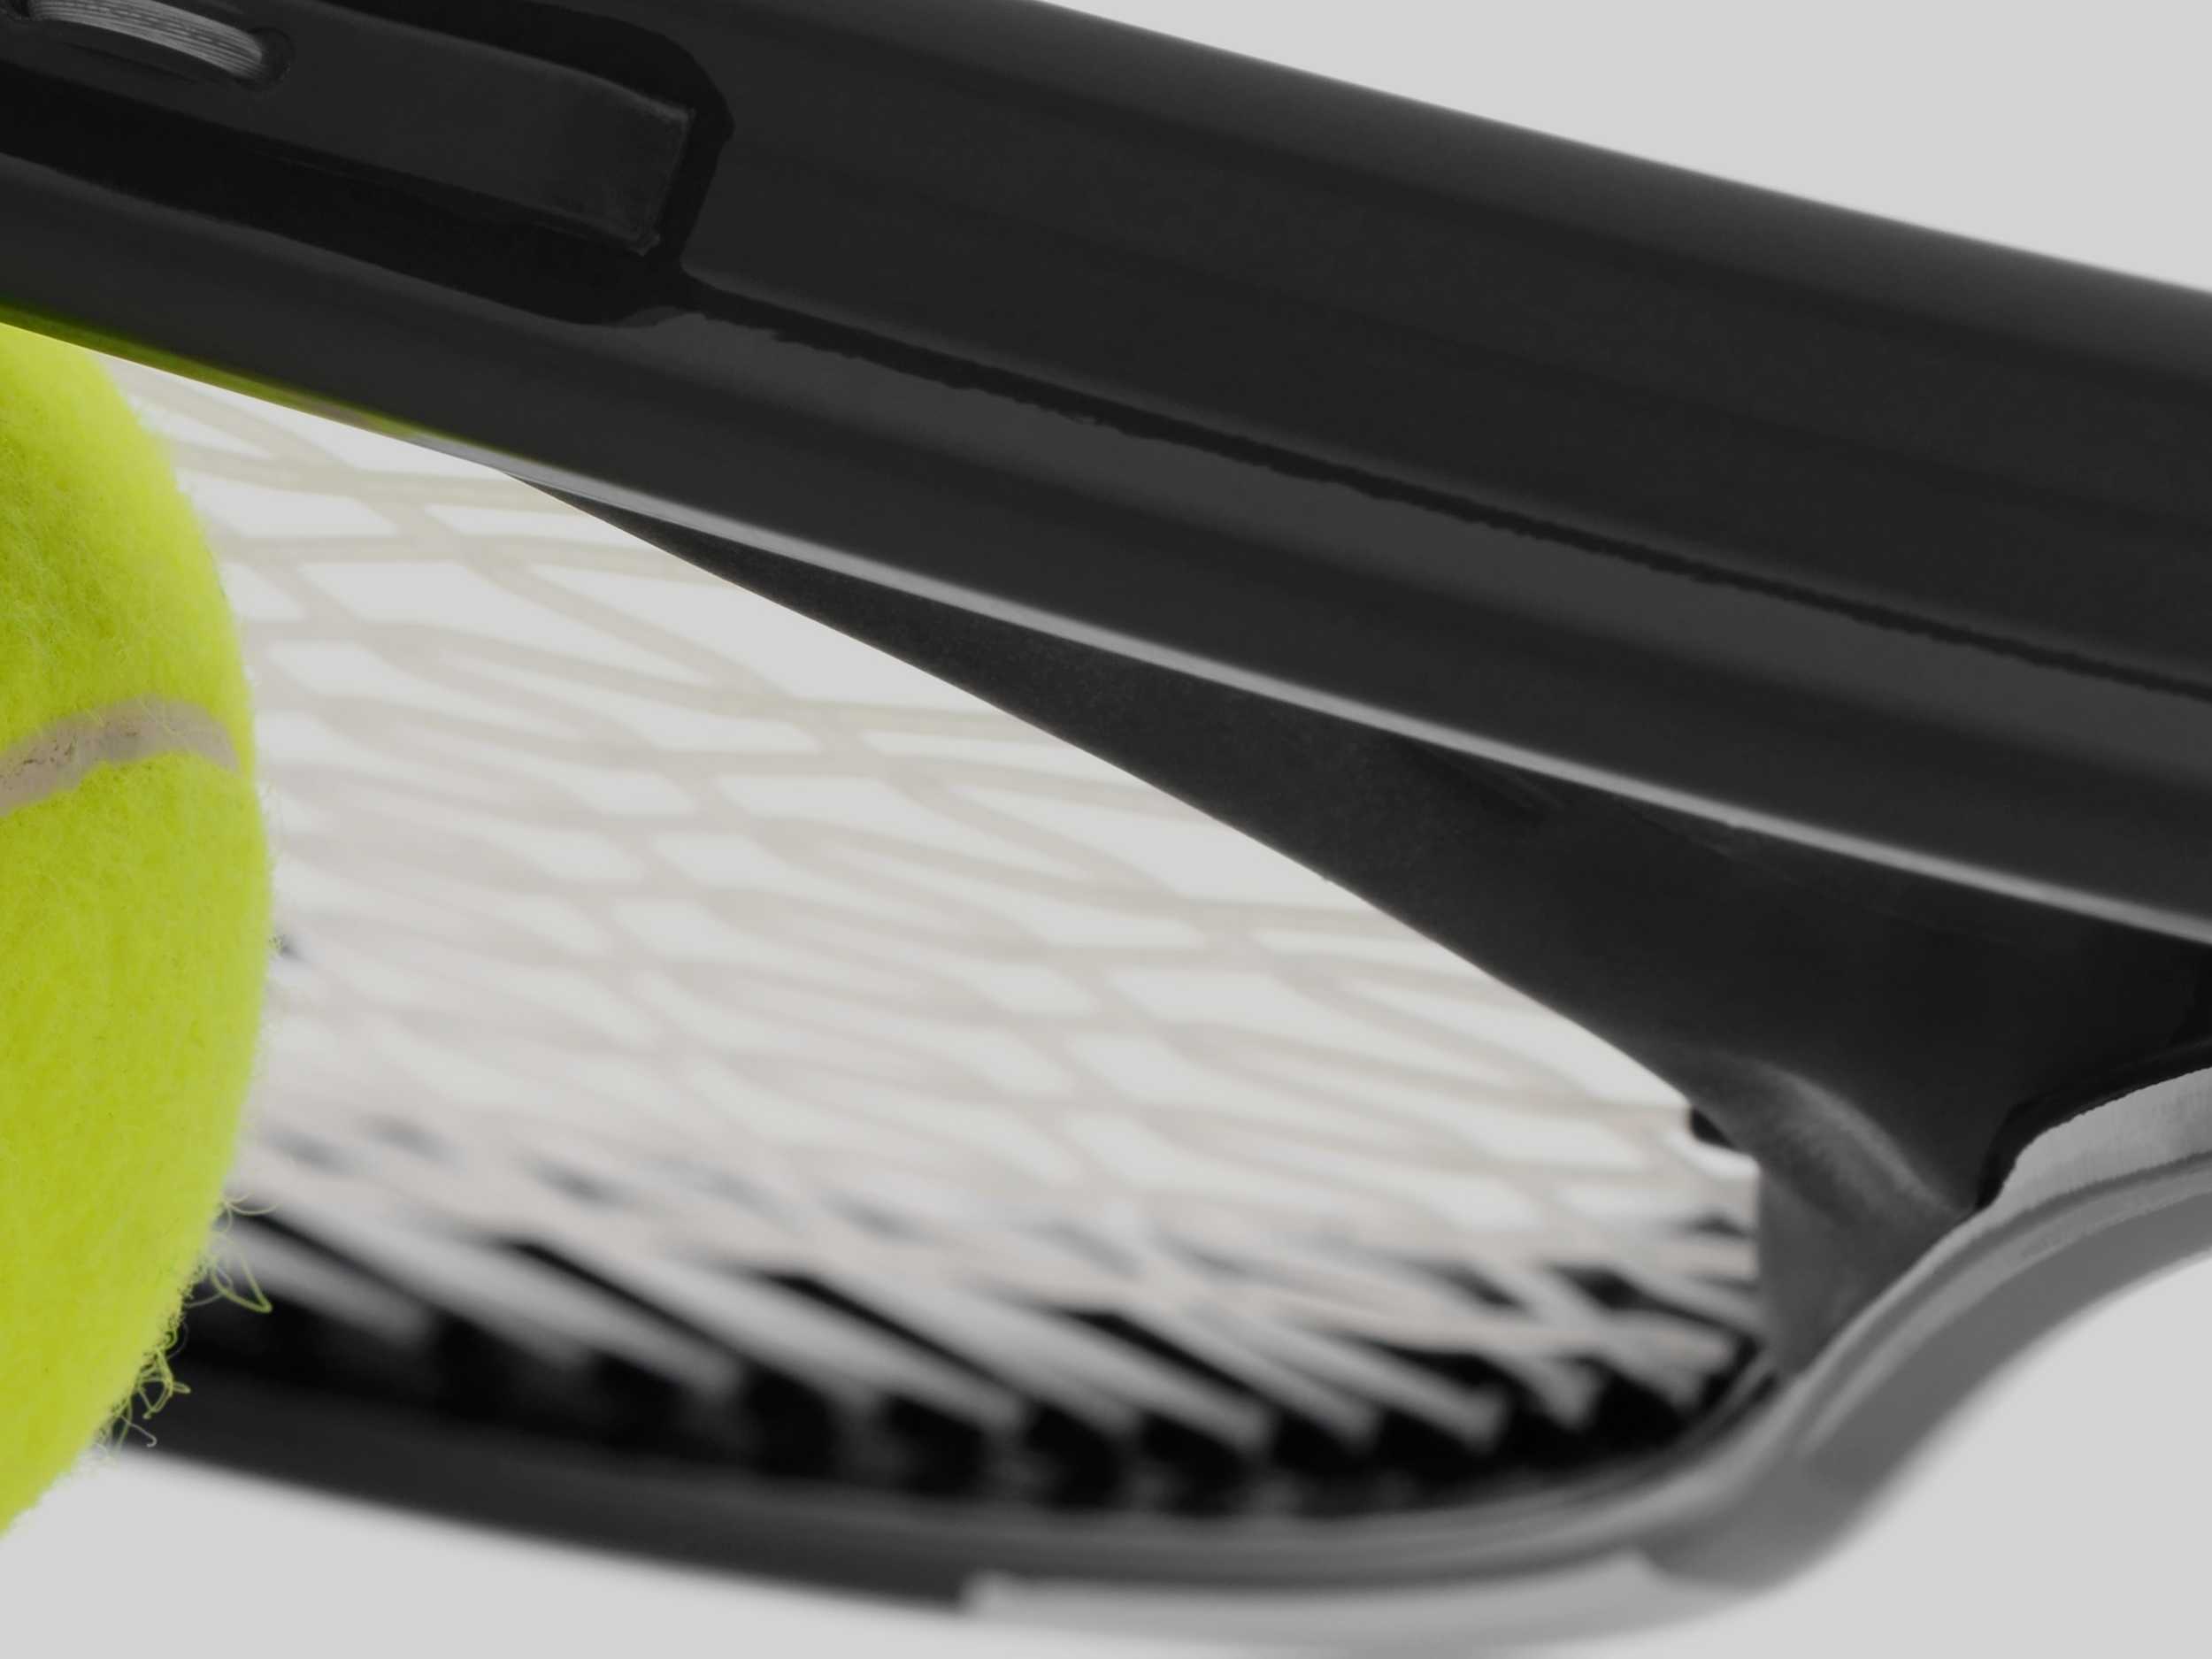 Close-up of tennis racket